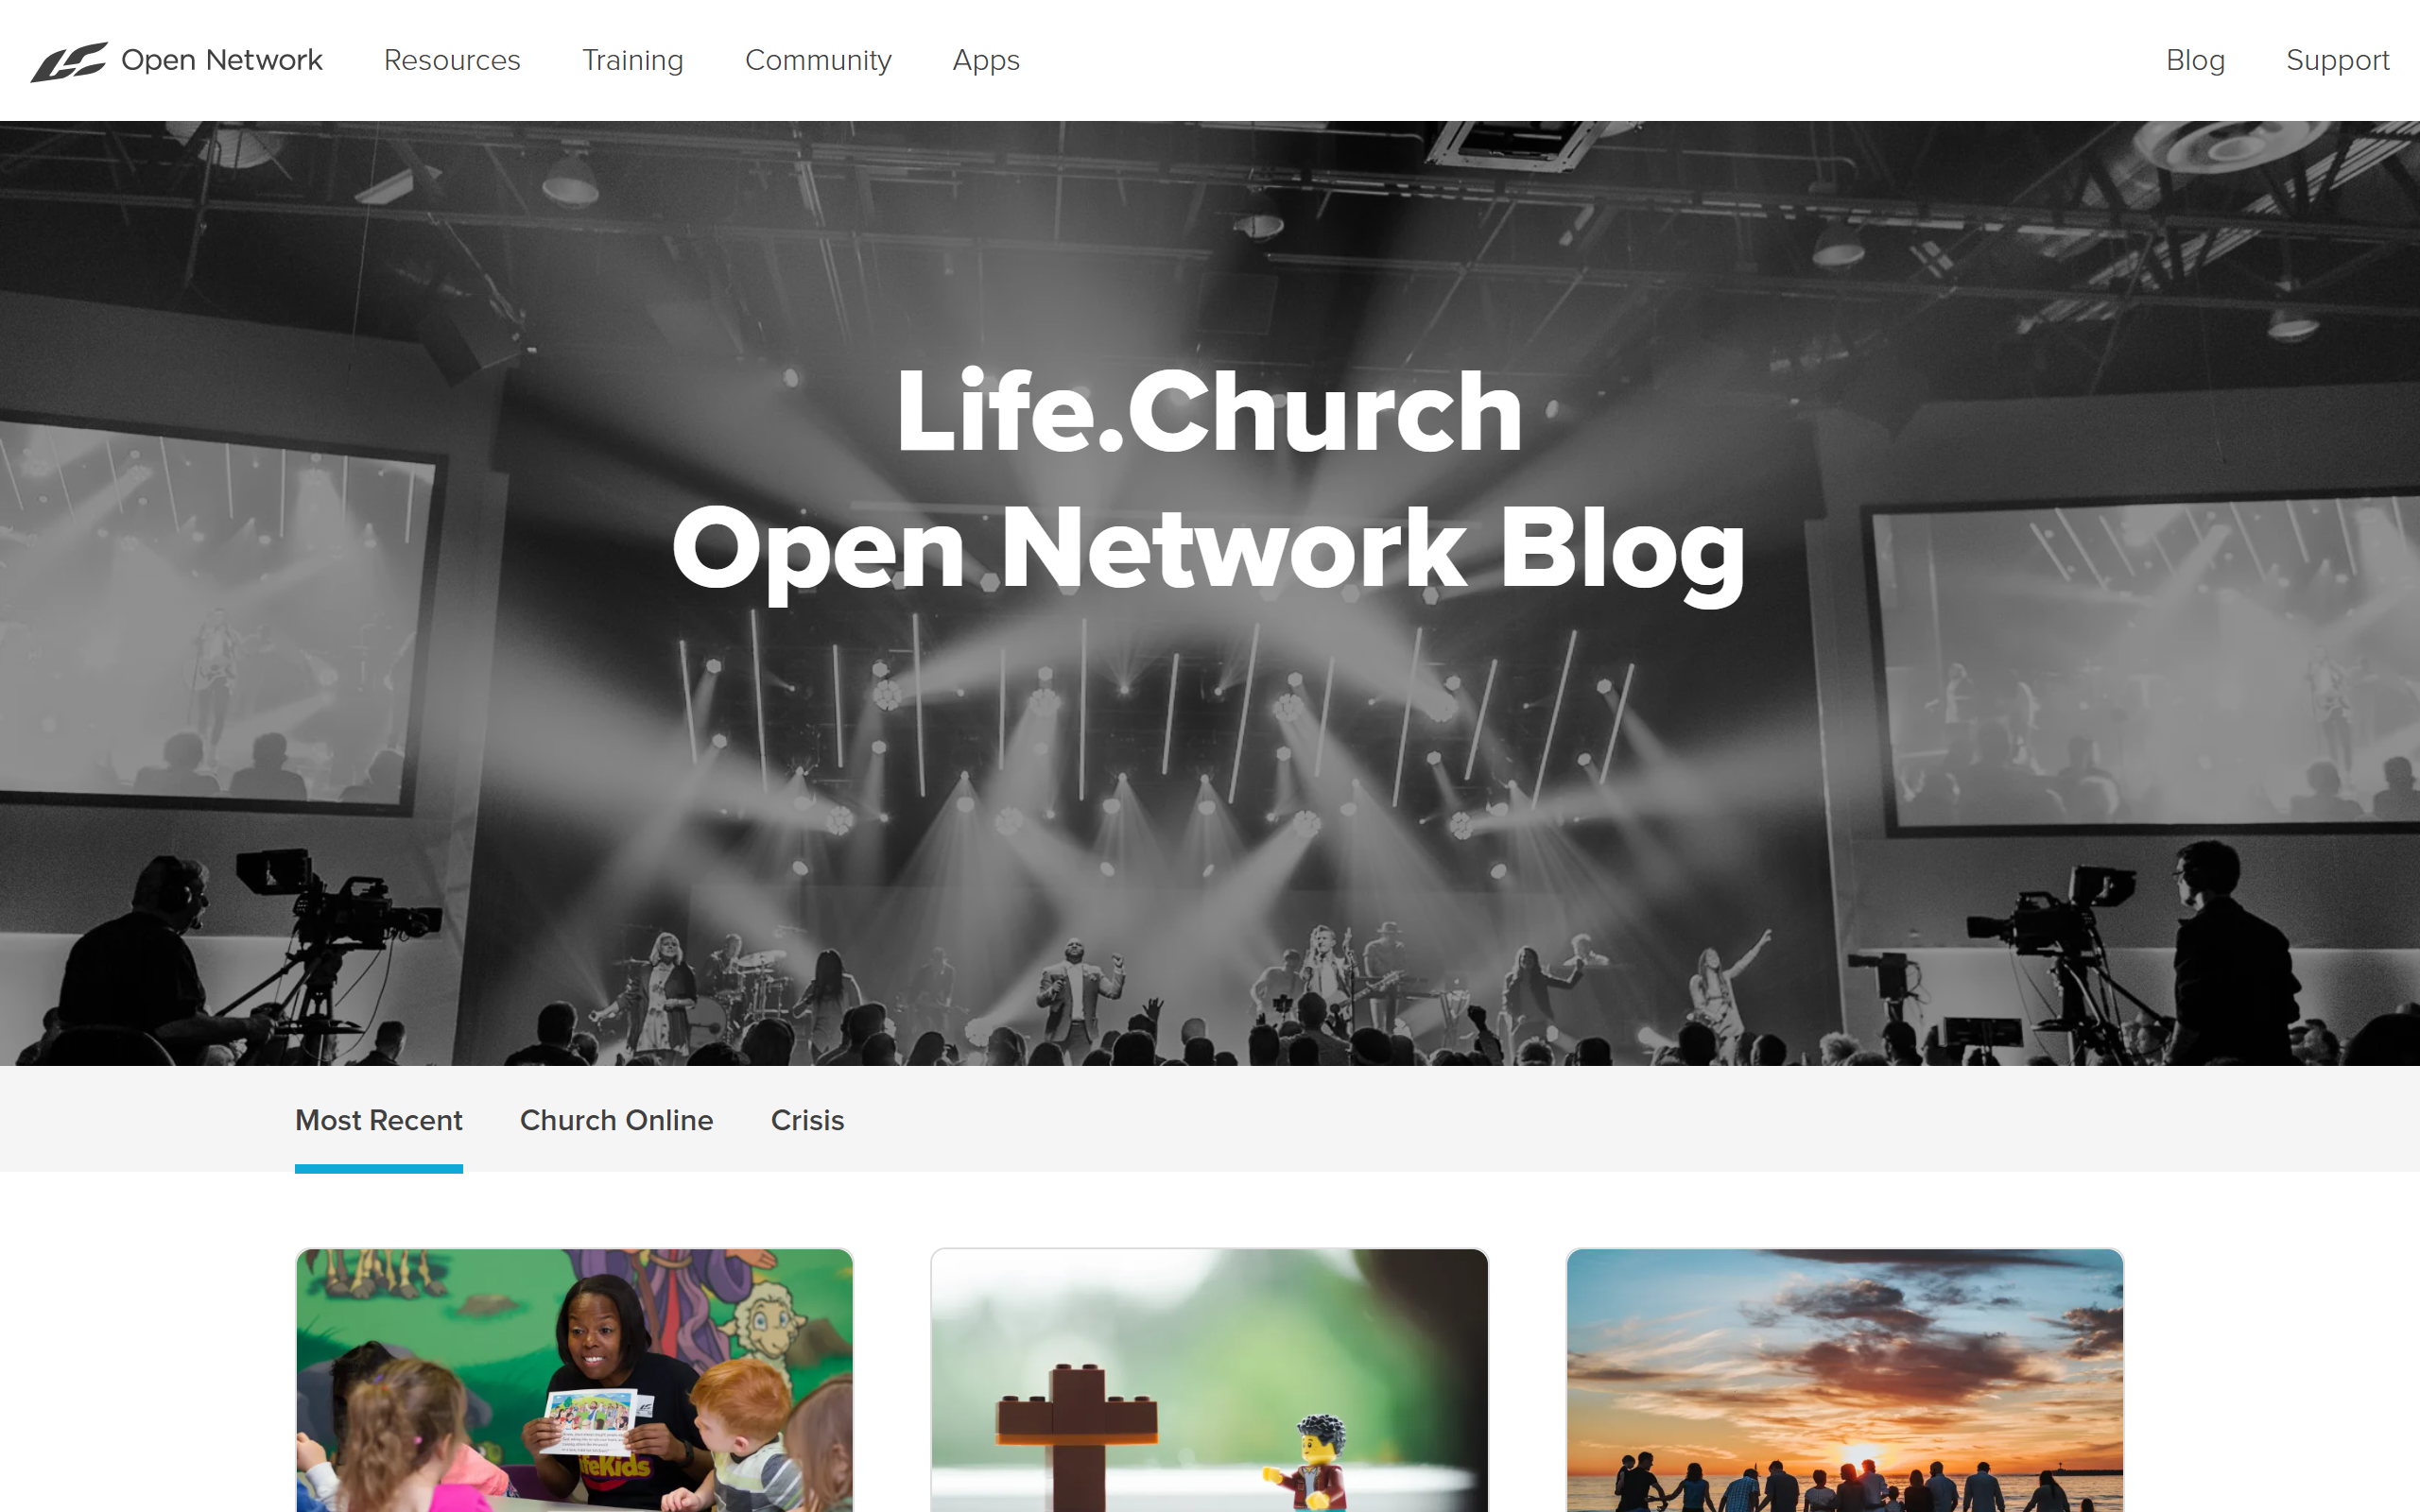 Life.Church Christian Blog